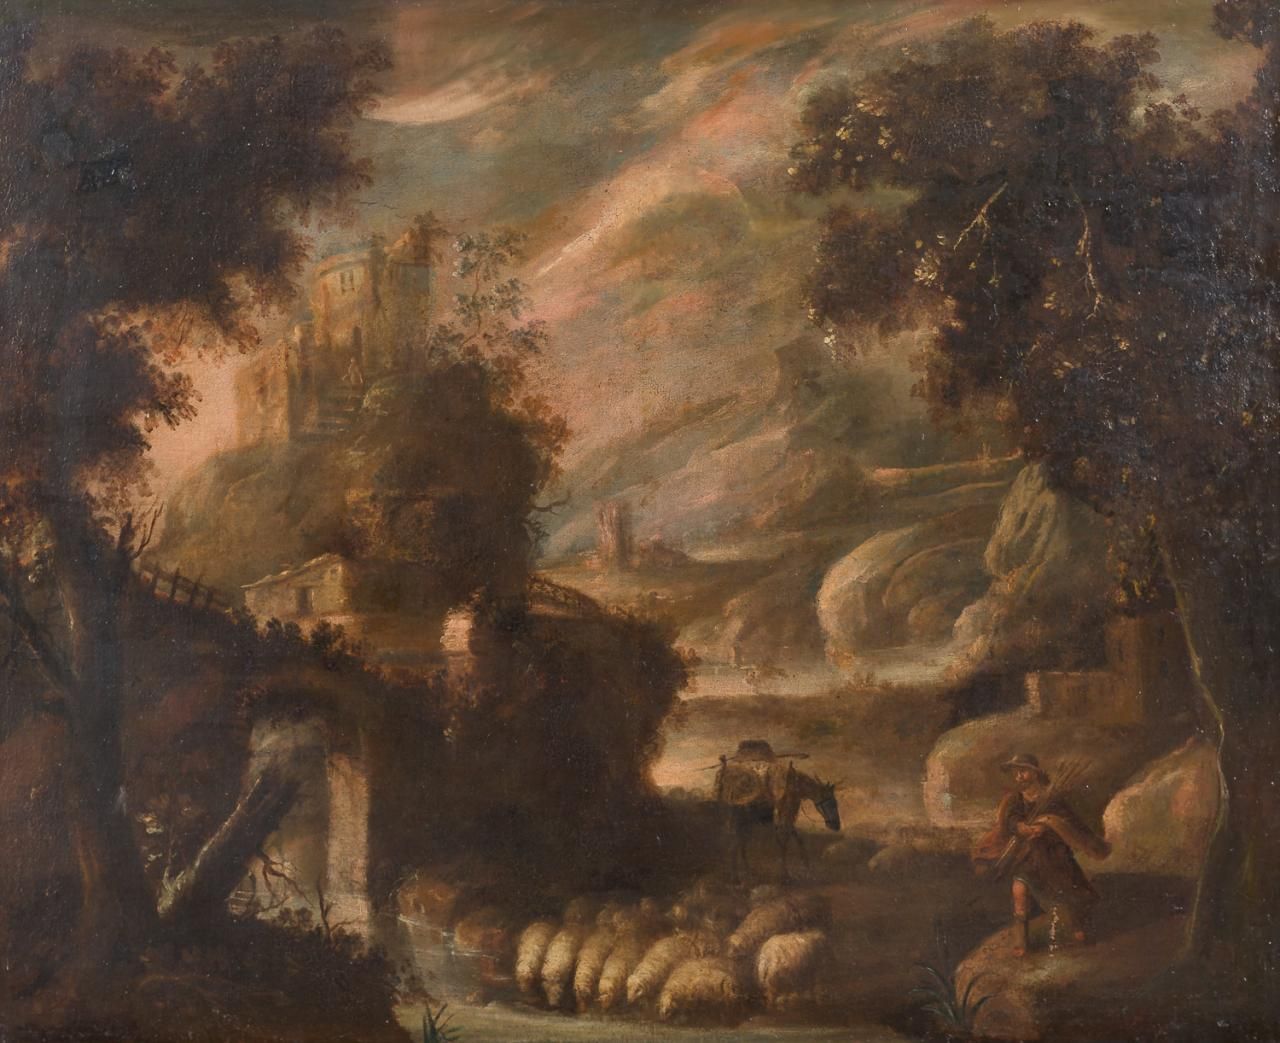 IGNACIO DE IRIARTE (Azcoitia, 1621 - Sevilla, 1670) 放牧场景
布面油画
98.5 x 125.5 cm